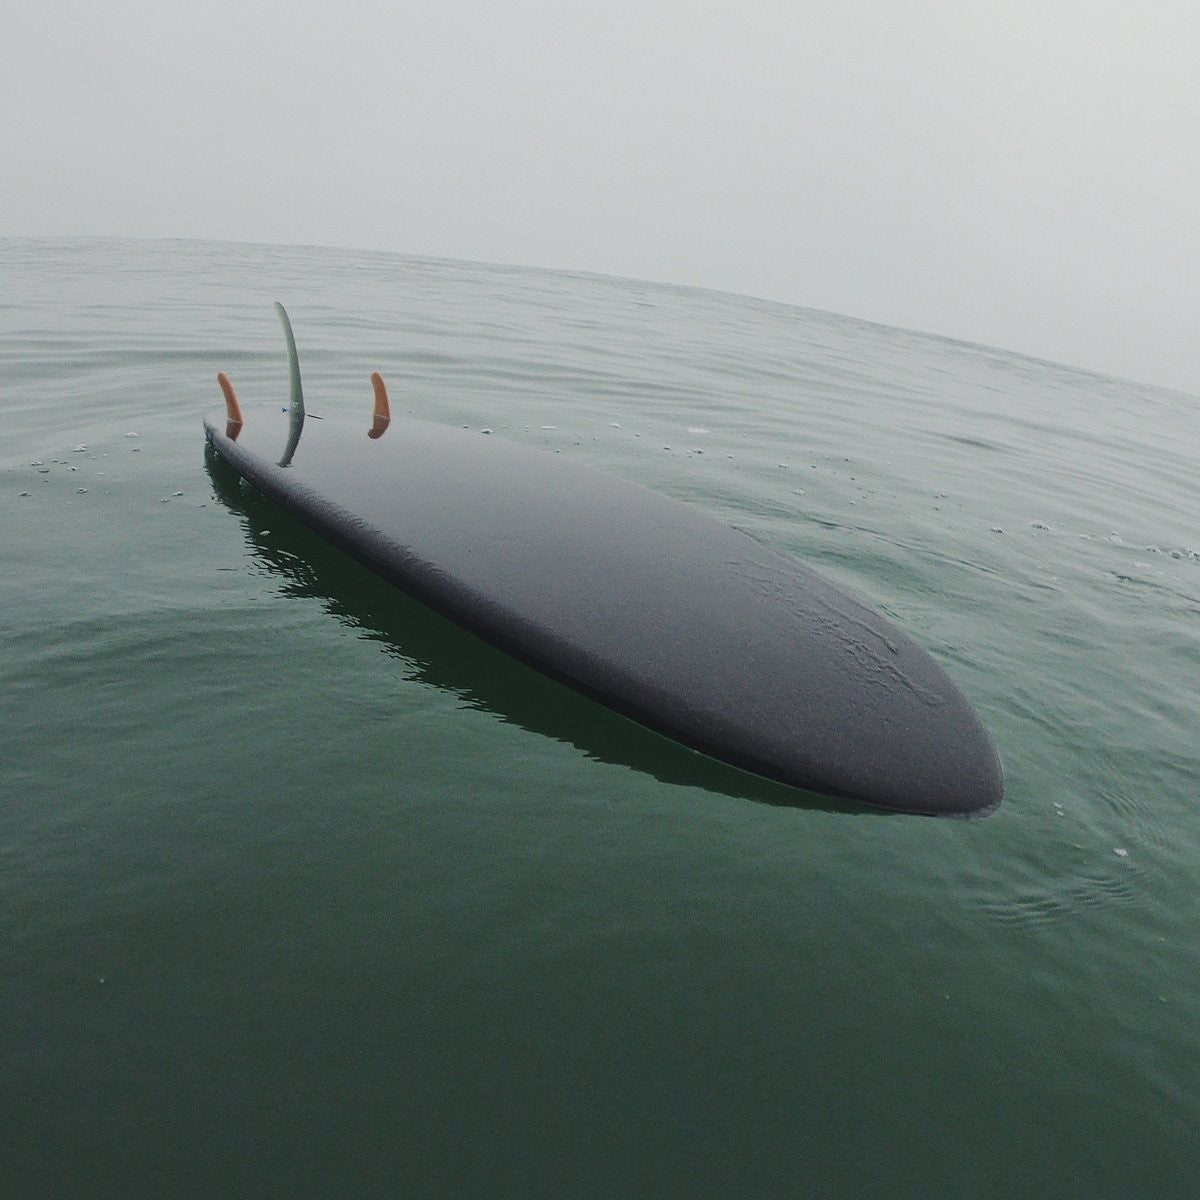 ALMOND Surfboards - R-Series 6'4 - Black